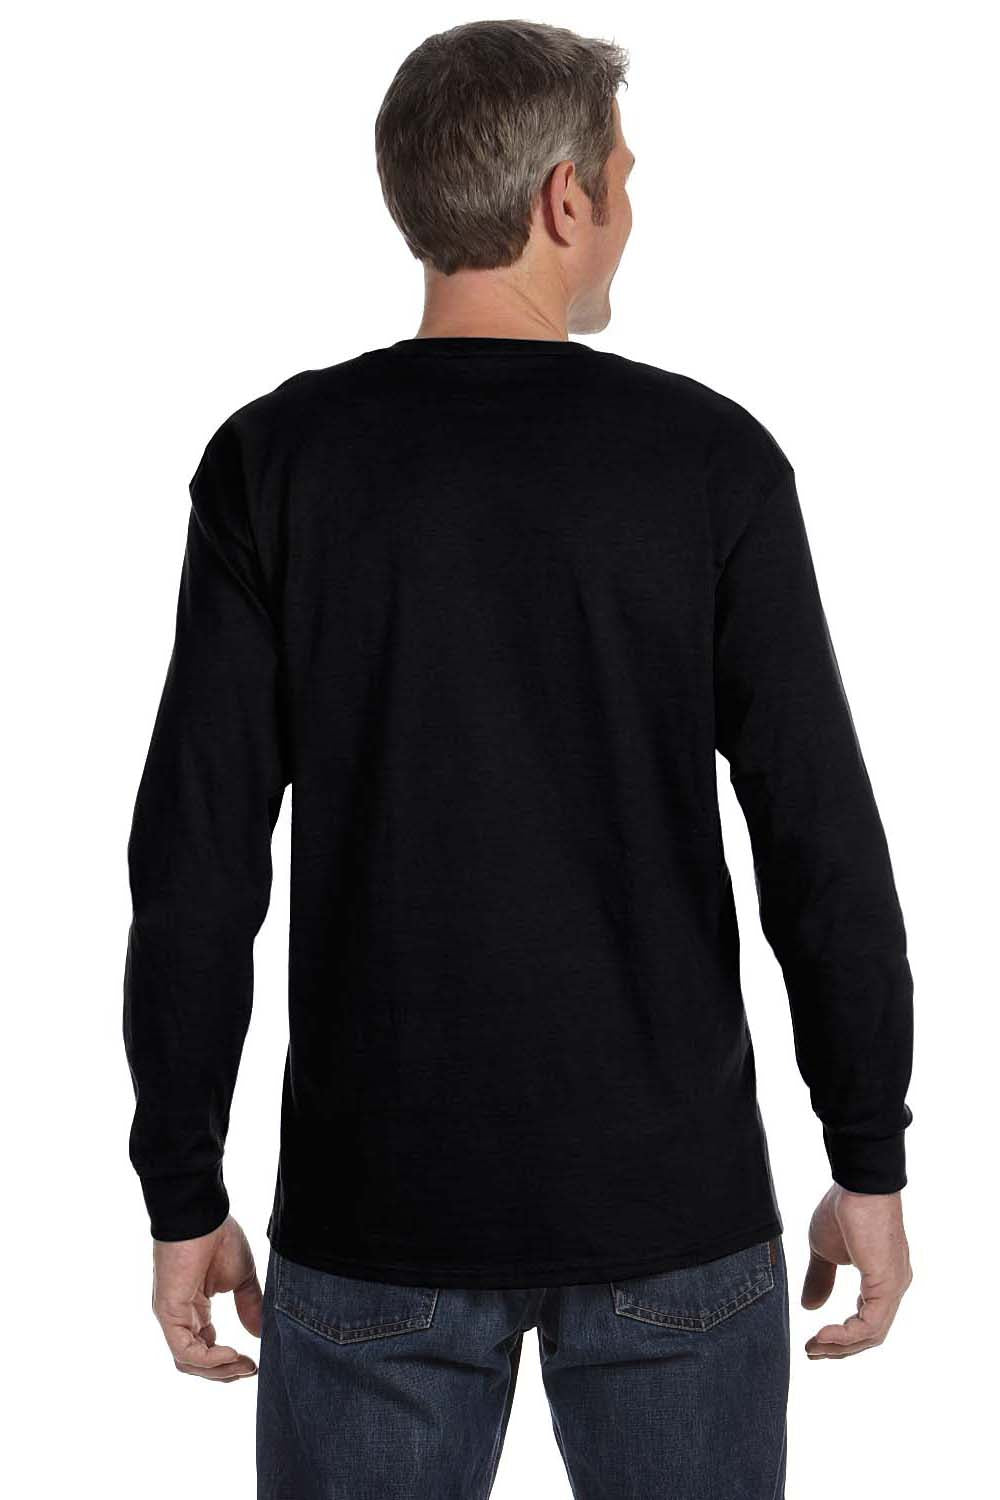 Jerzees 29L Mens Dri-Power Moisture Wicking Long Sleeve Crewneck T-Shirt Black Back